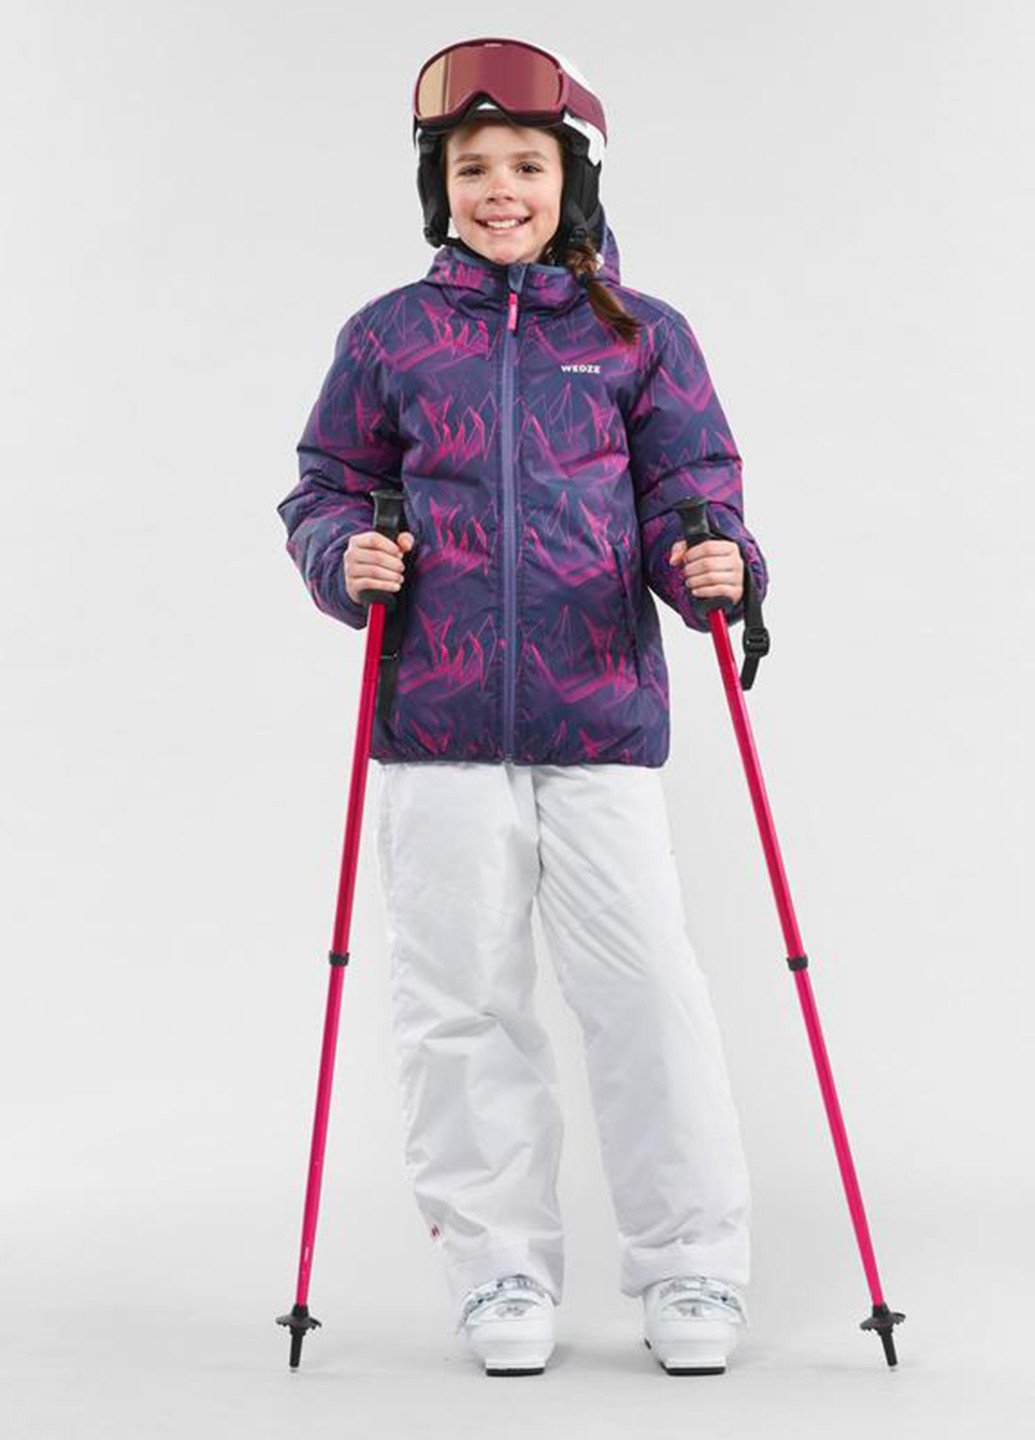 Фиолетовая зимняя куртка Decathlon